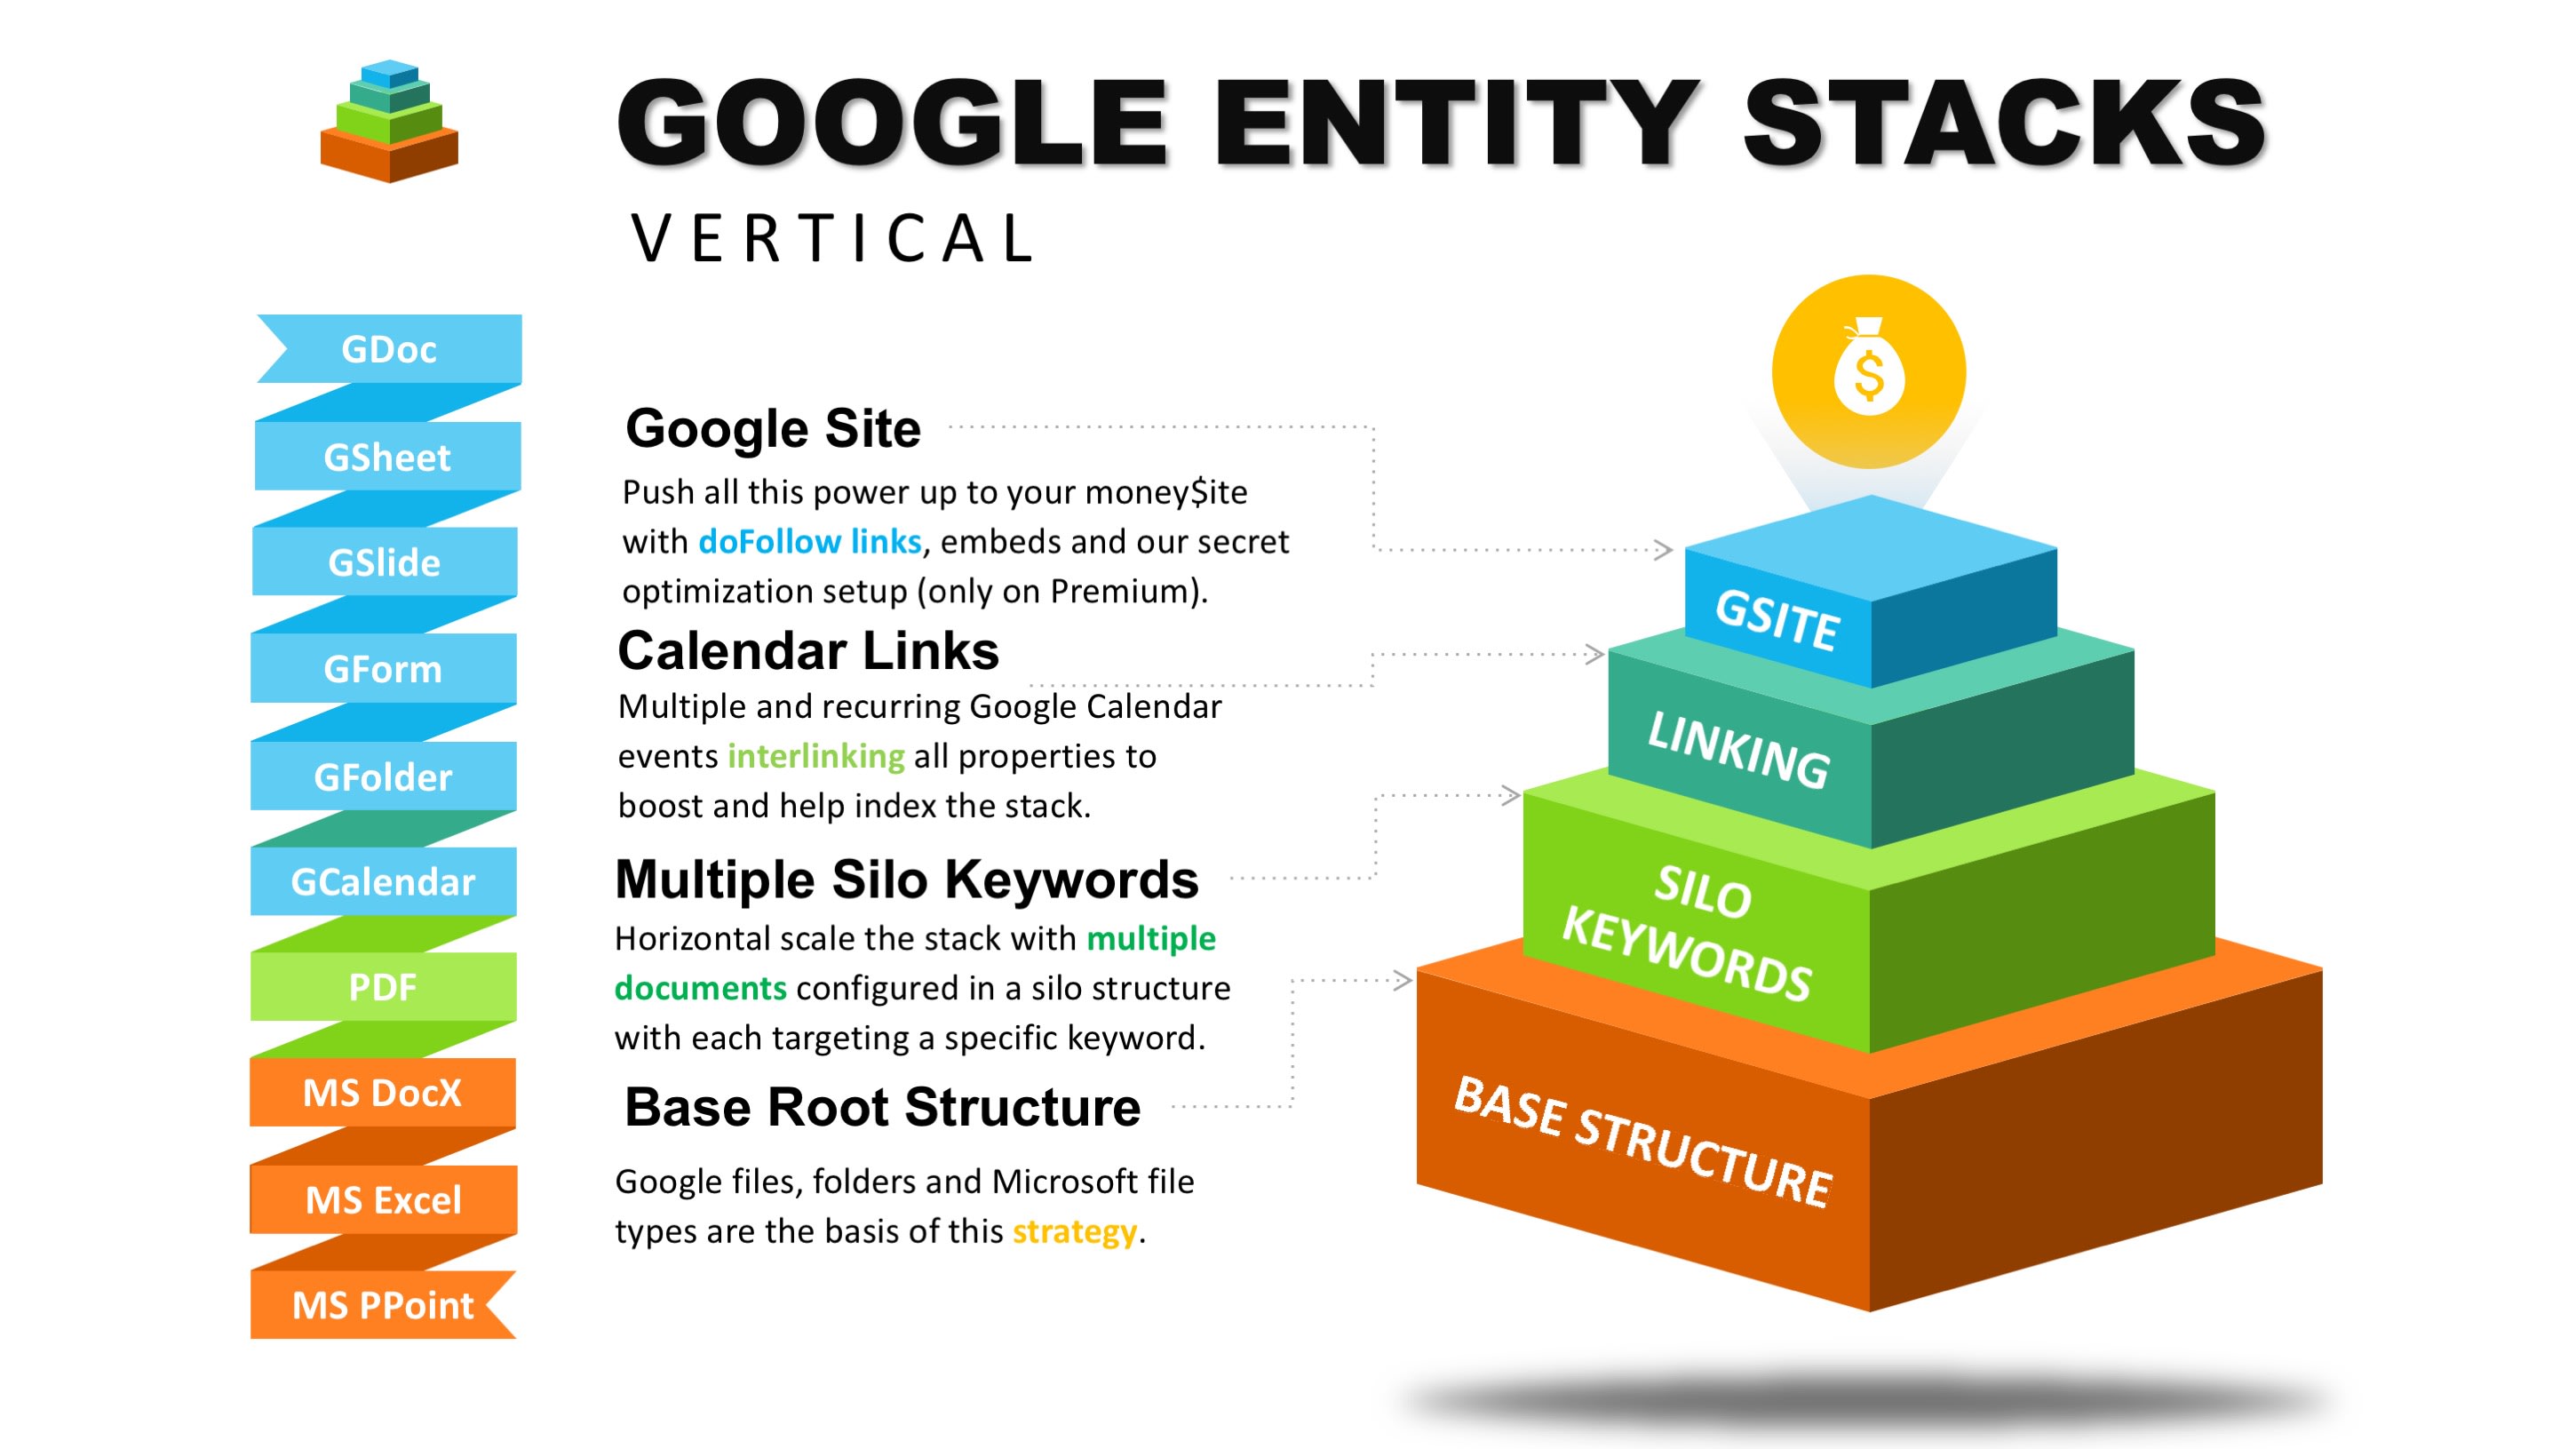 Google Authority Stacks